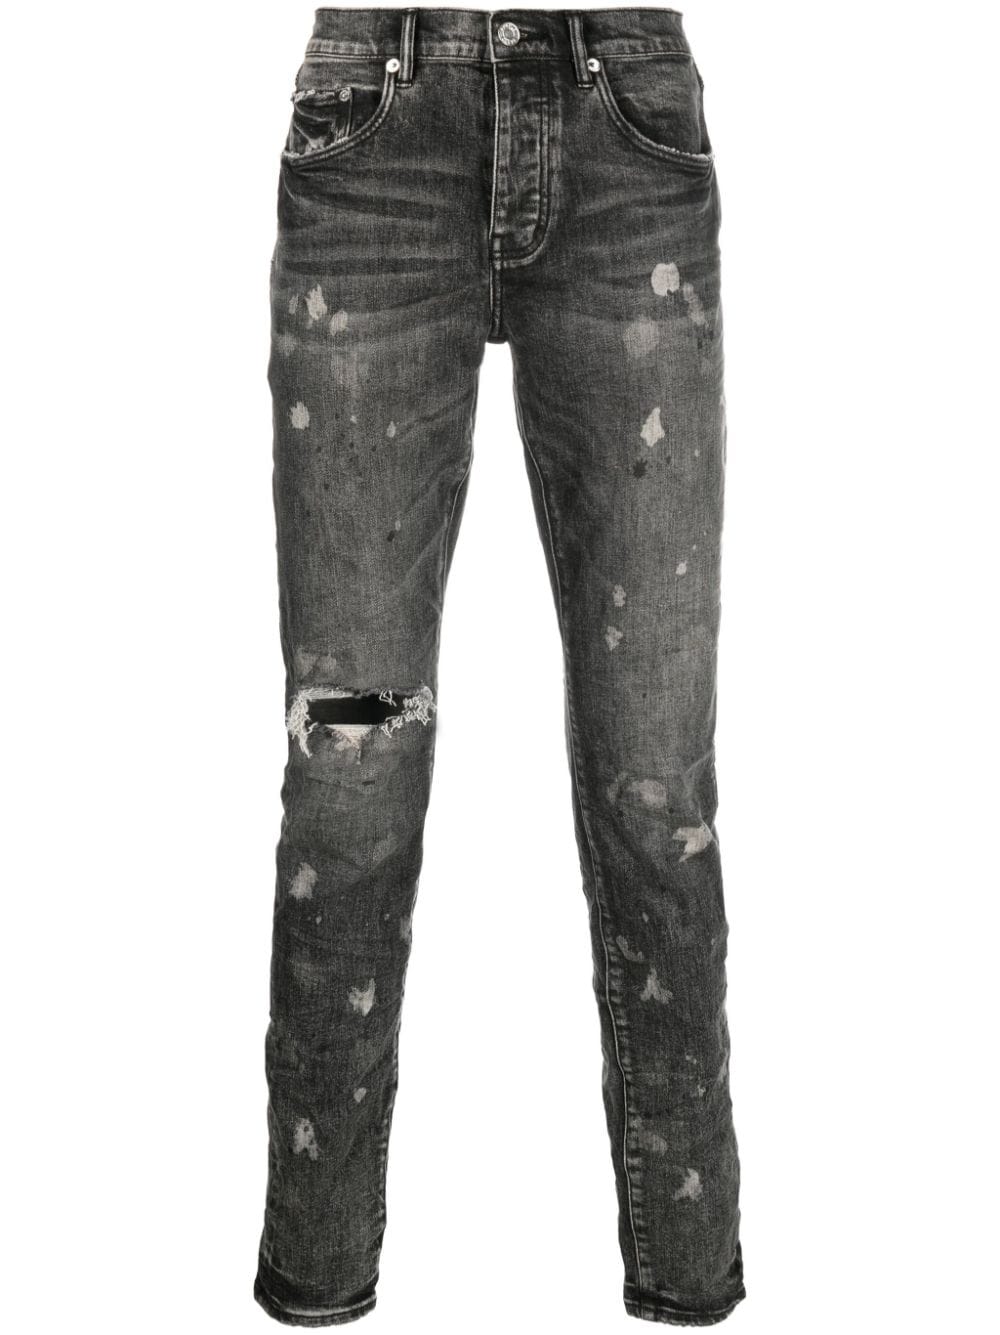 PURPLE BRAND P001 Low Rise Skinny Jeans